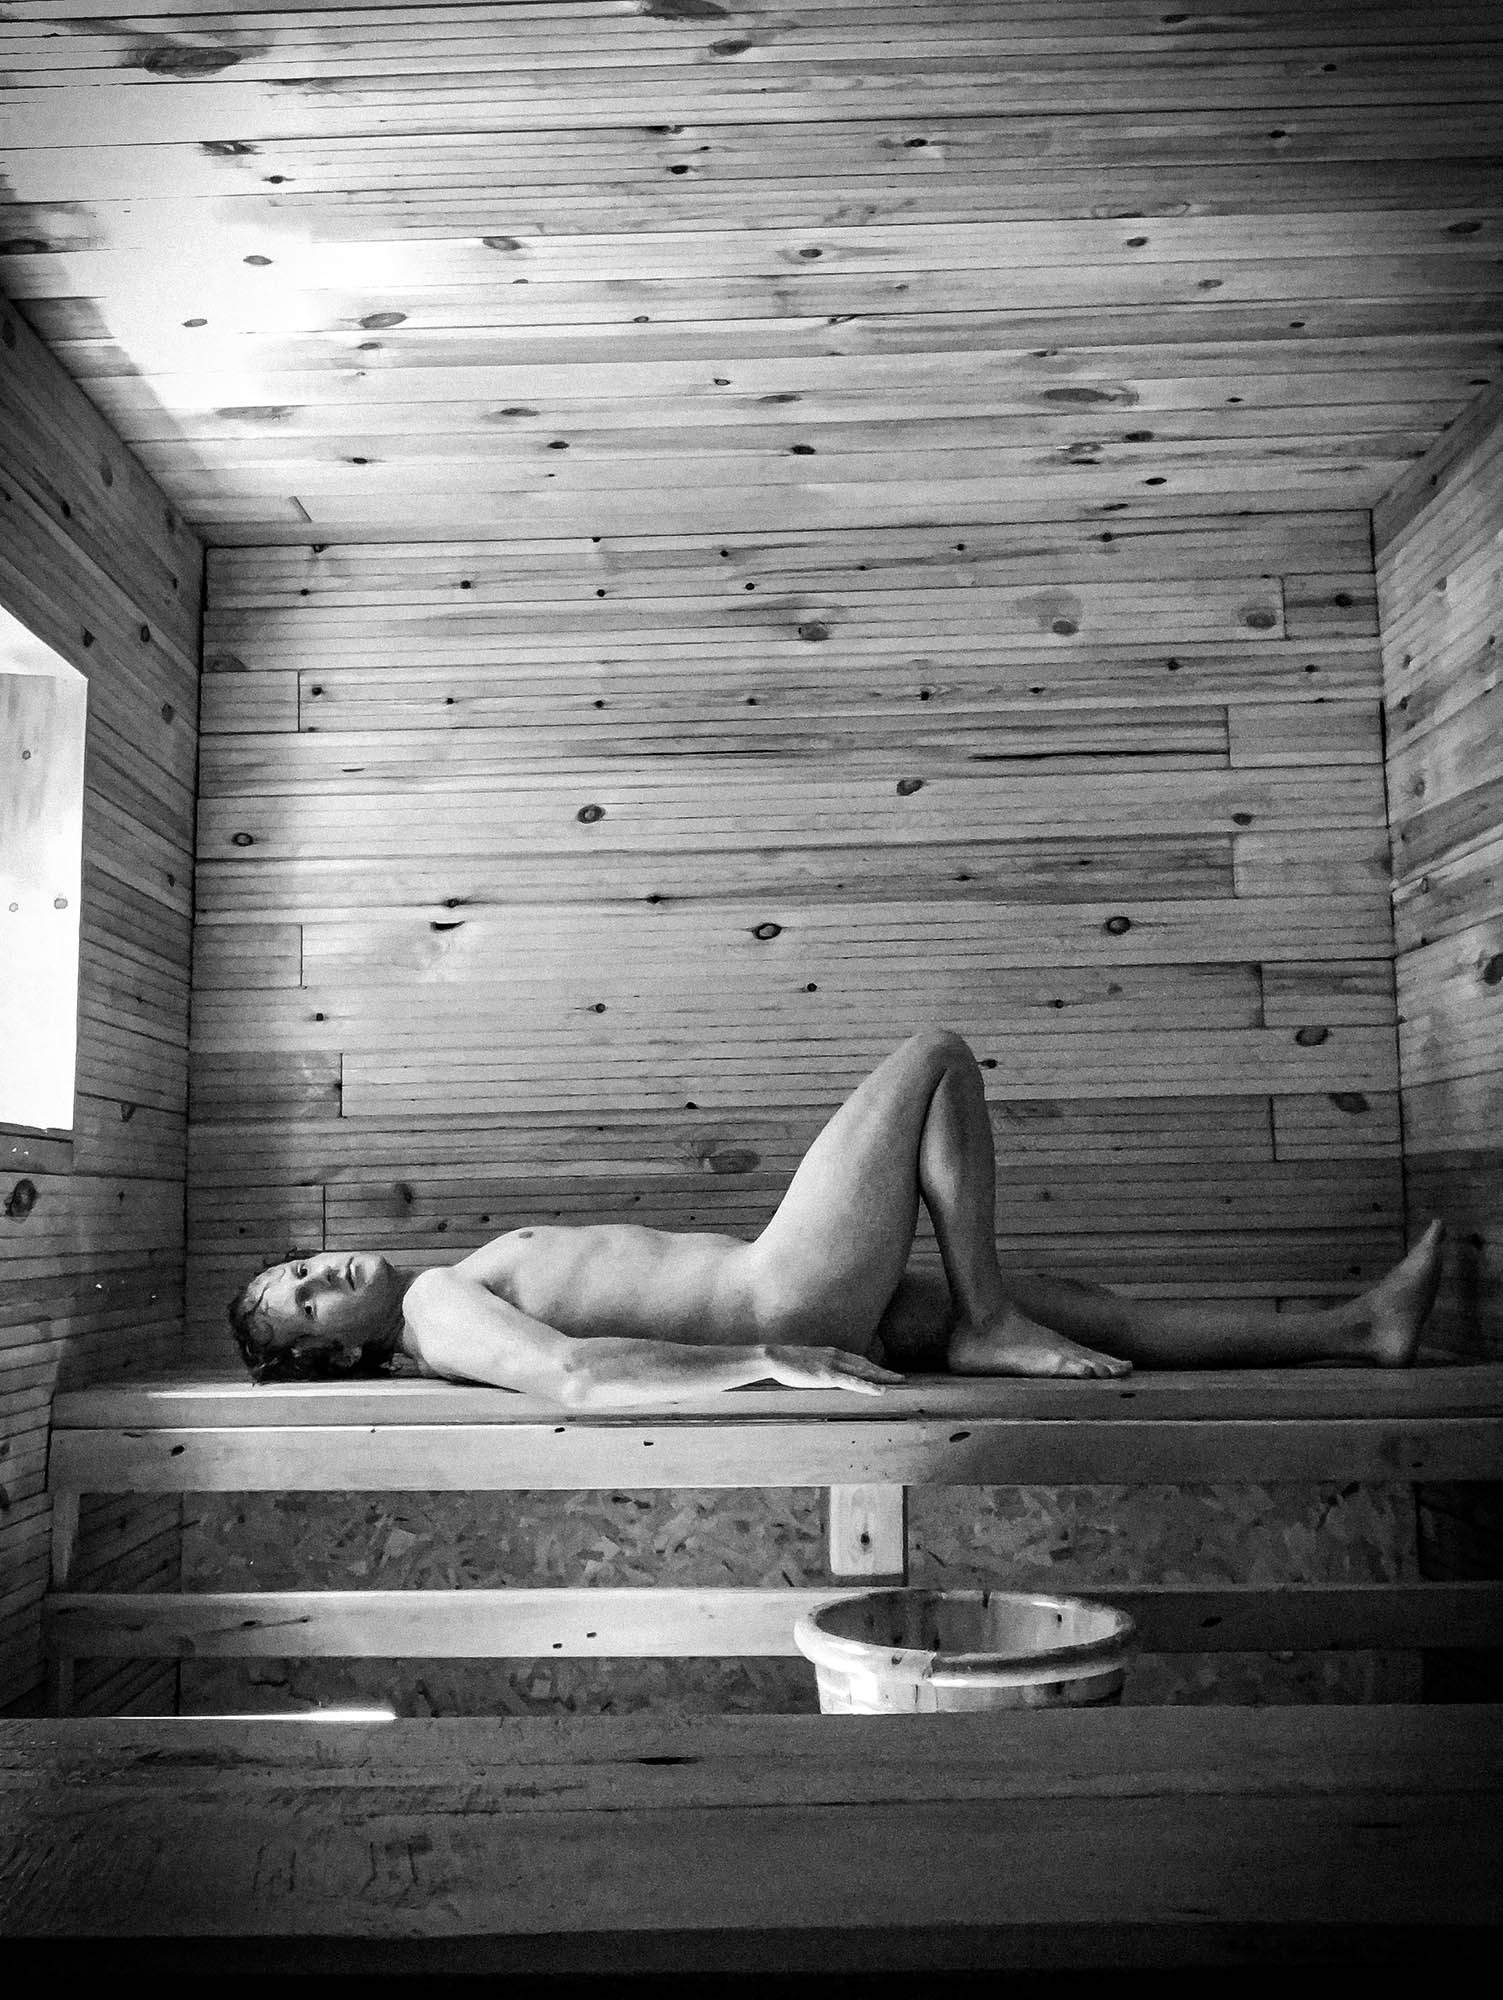 Ben naked in a sauna